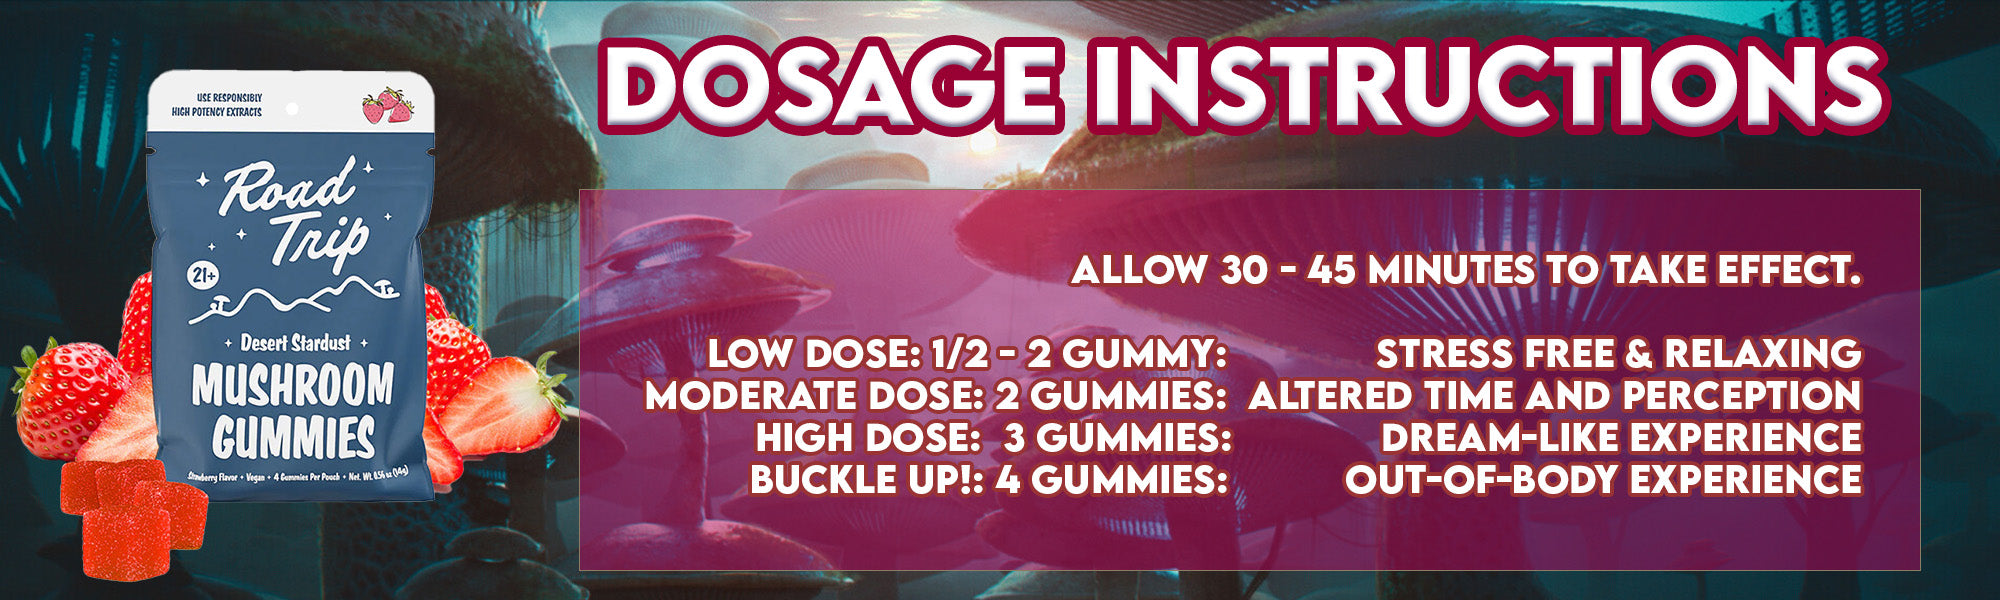 Road Trip Desert Stardust Strawberry Gummy Dosage Instructions